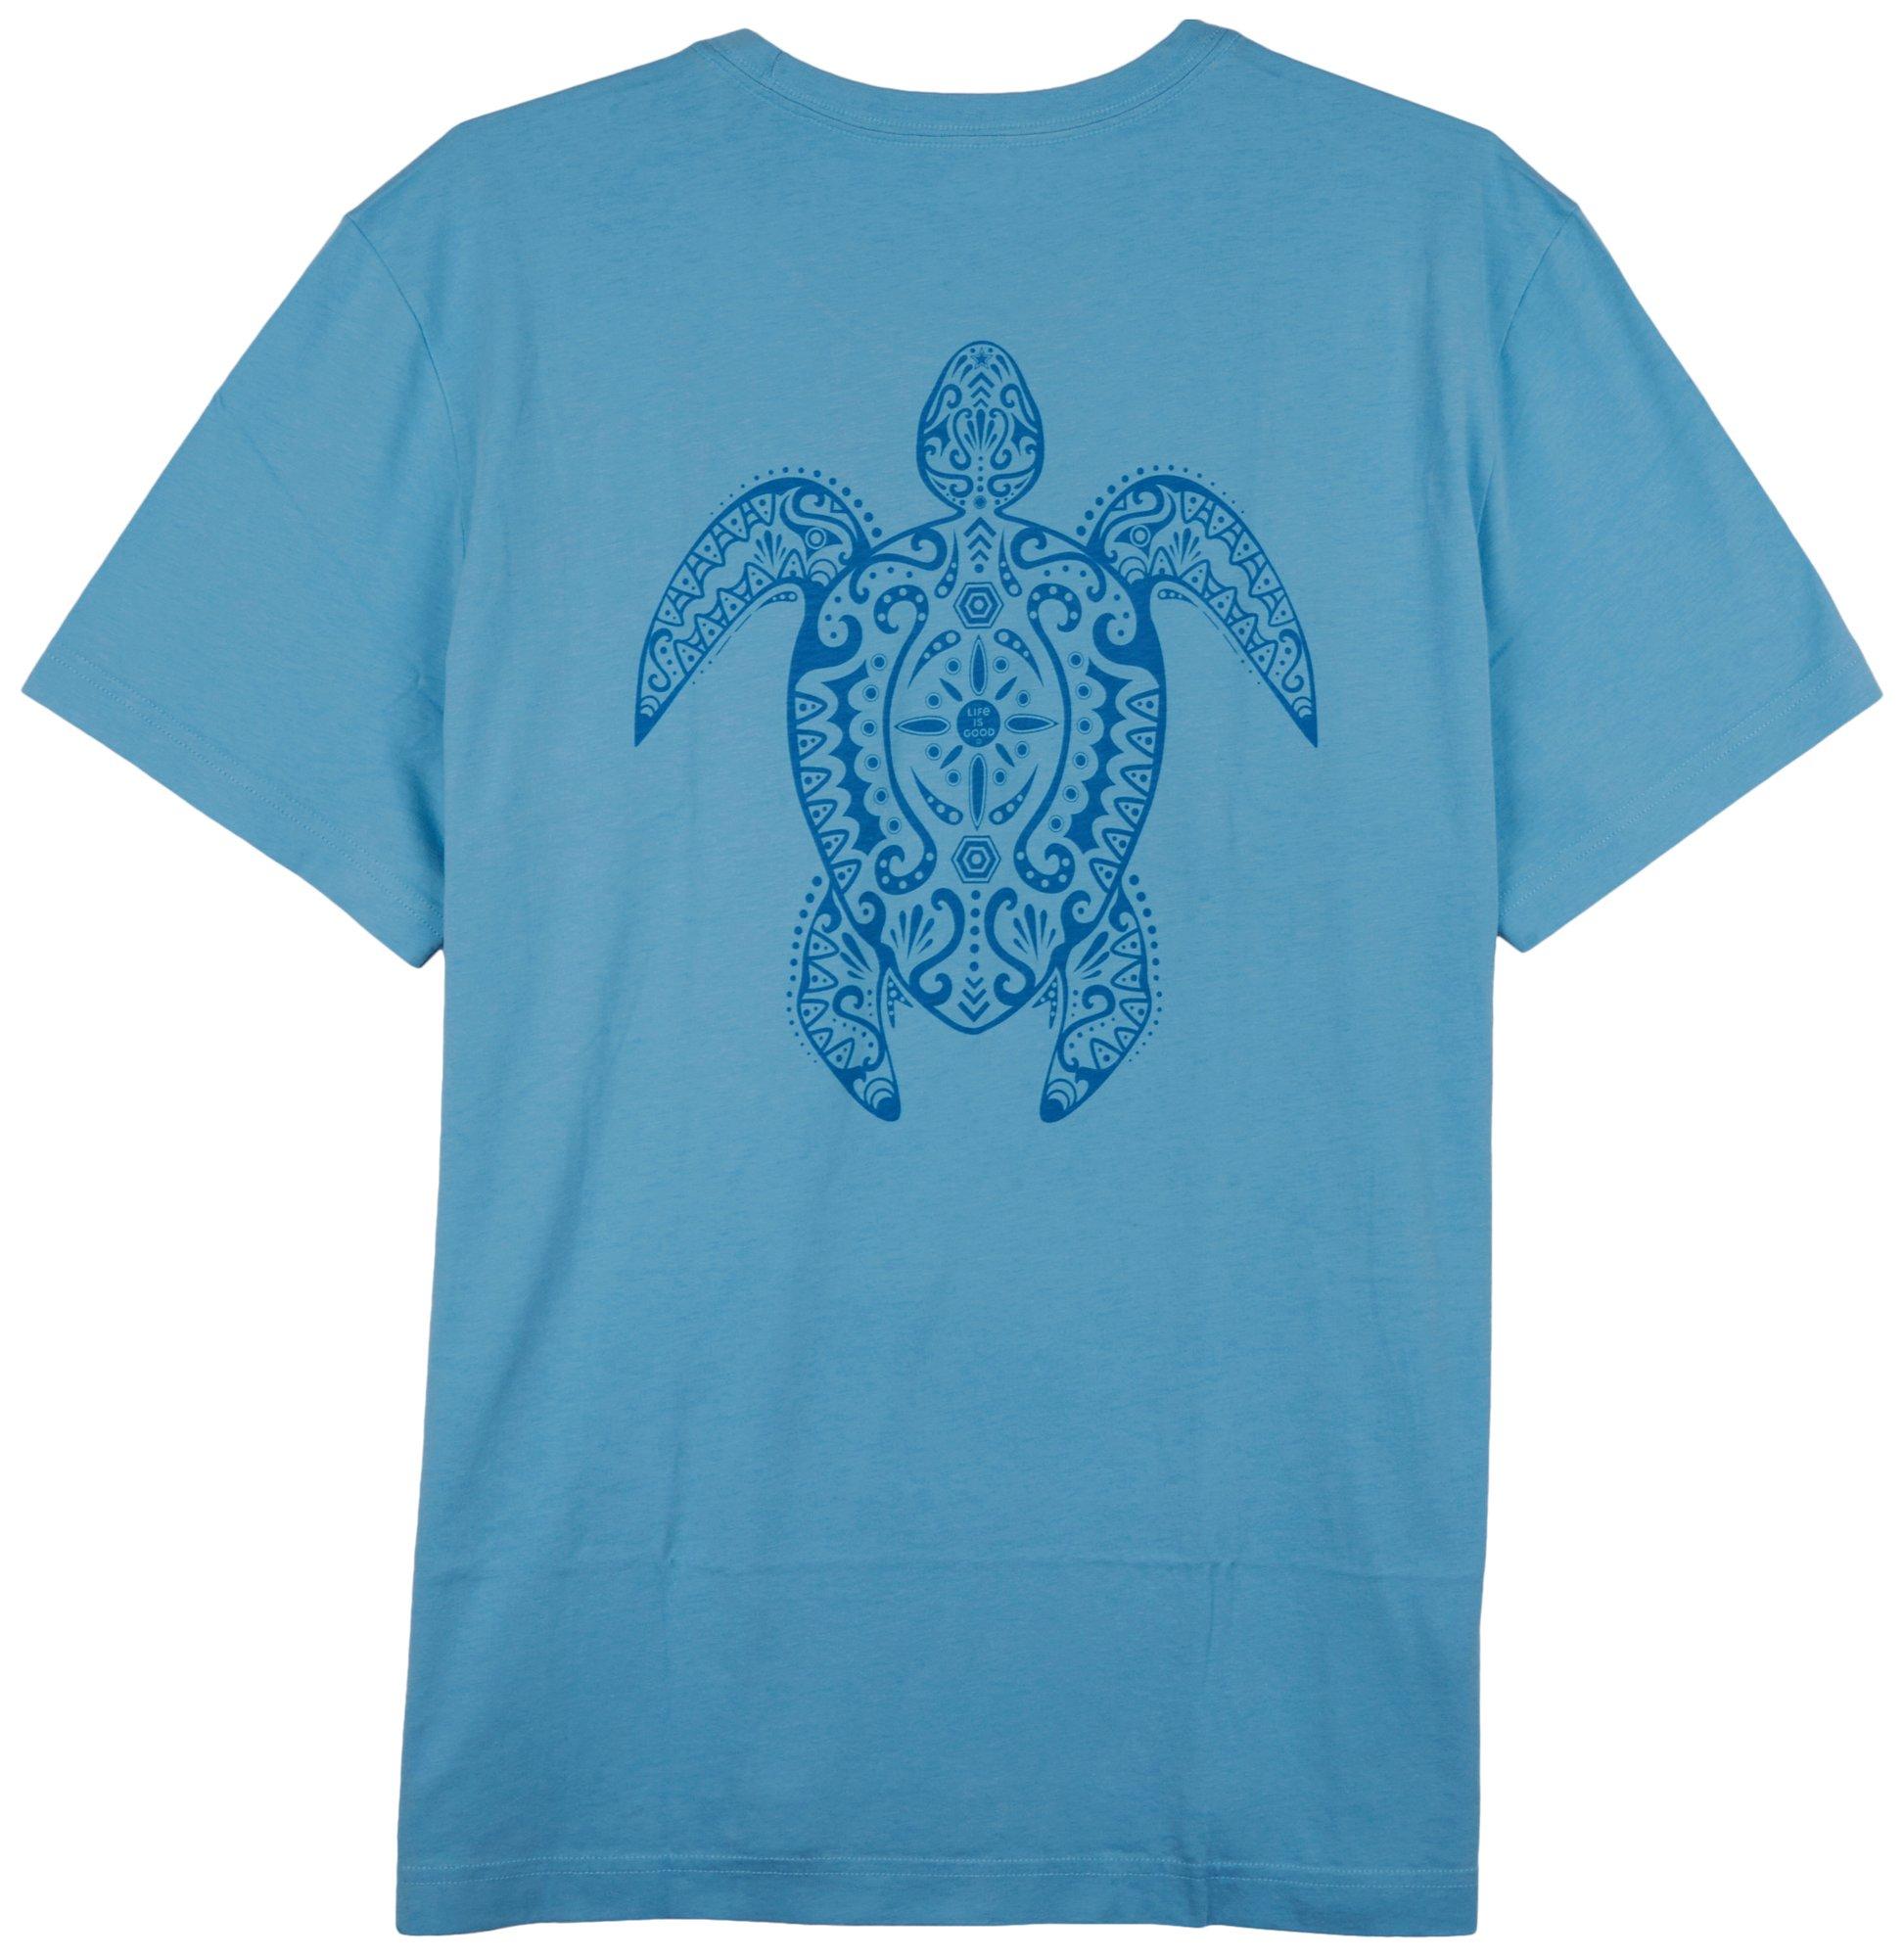 Mens Tribal Turtle Graphic T-Shirt